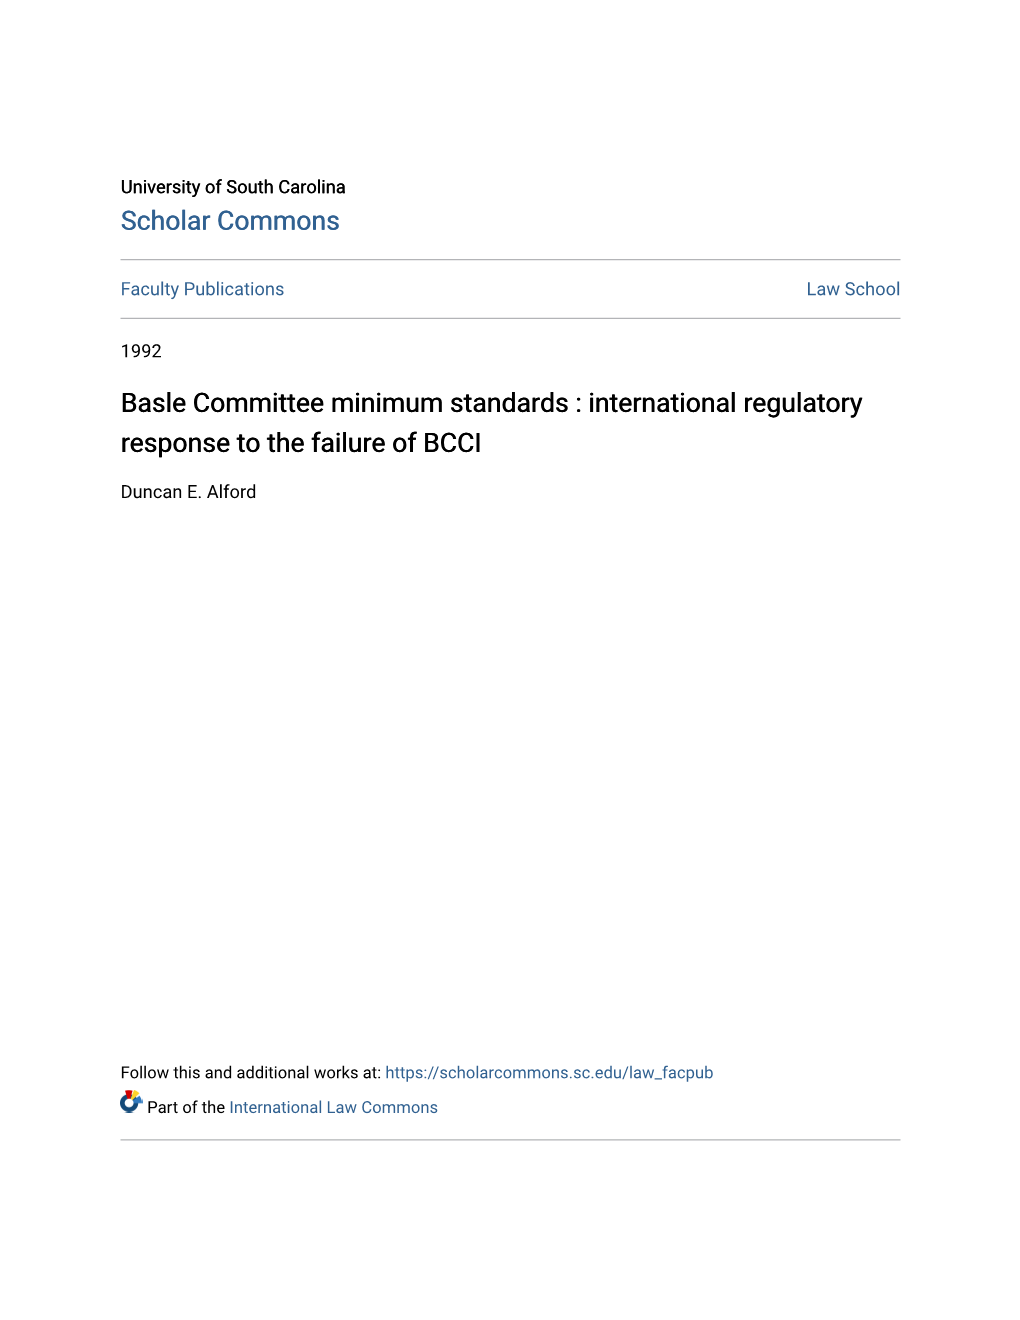 Basle Committee Minimum Standards : International Regulatory Response to the Failure of BCCI